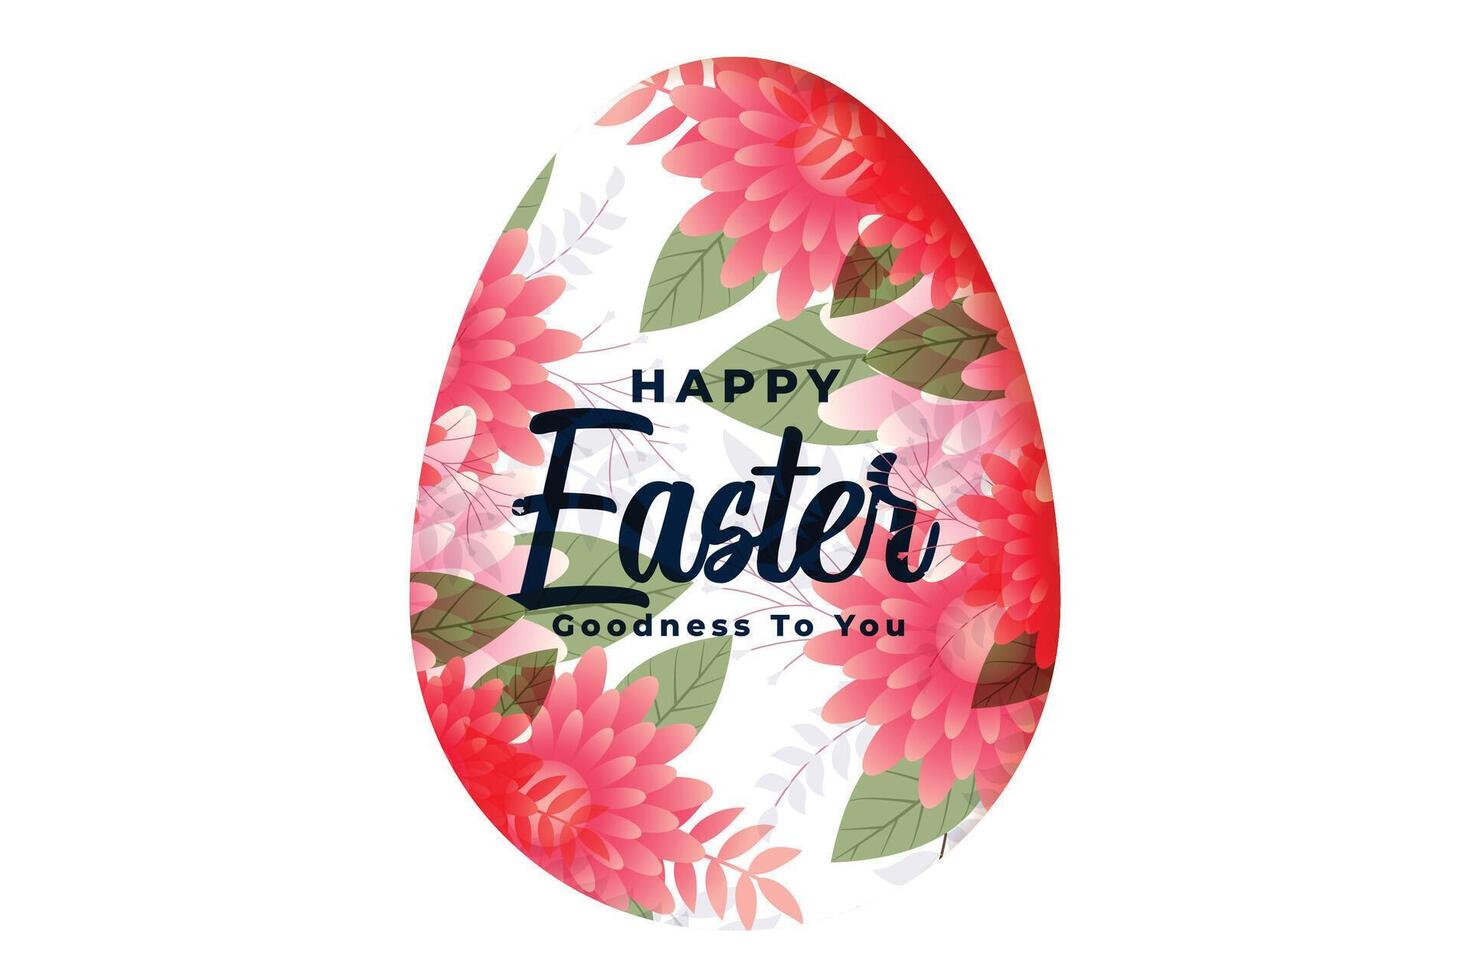 contento Pascua de Resurrección flor huevo decorativo festival tarjeta vector